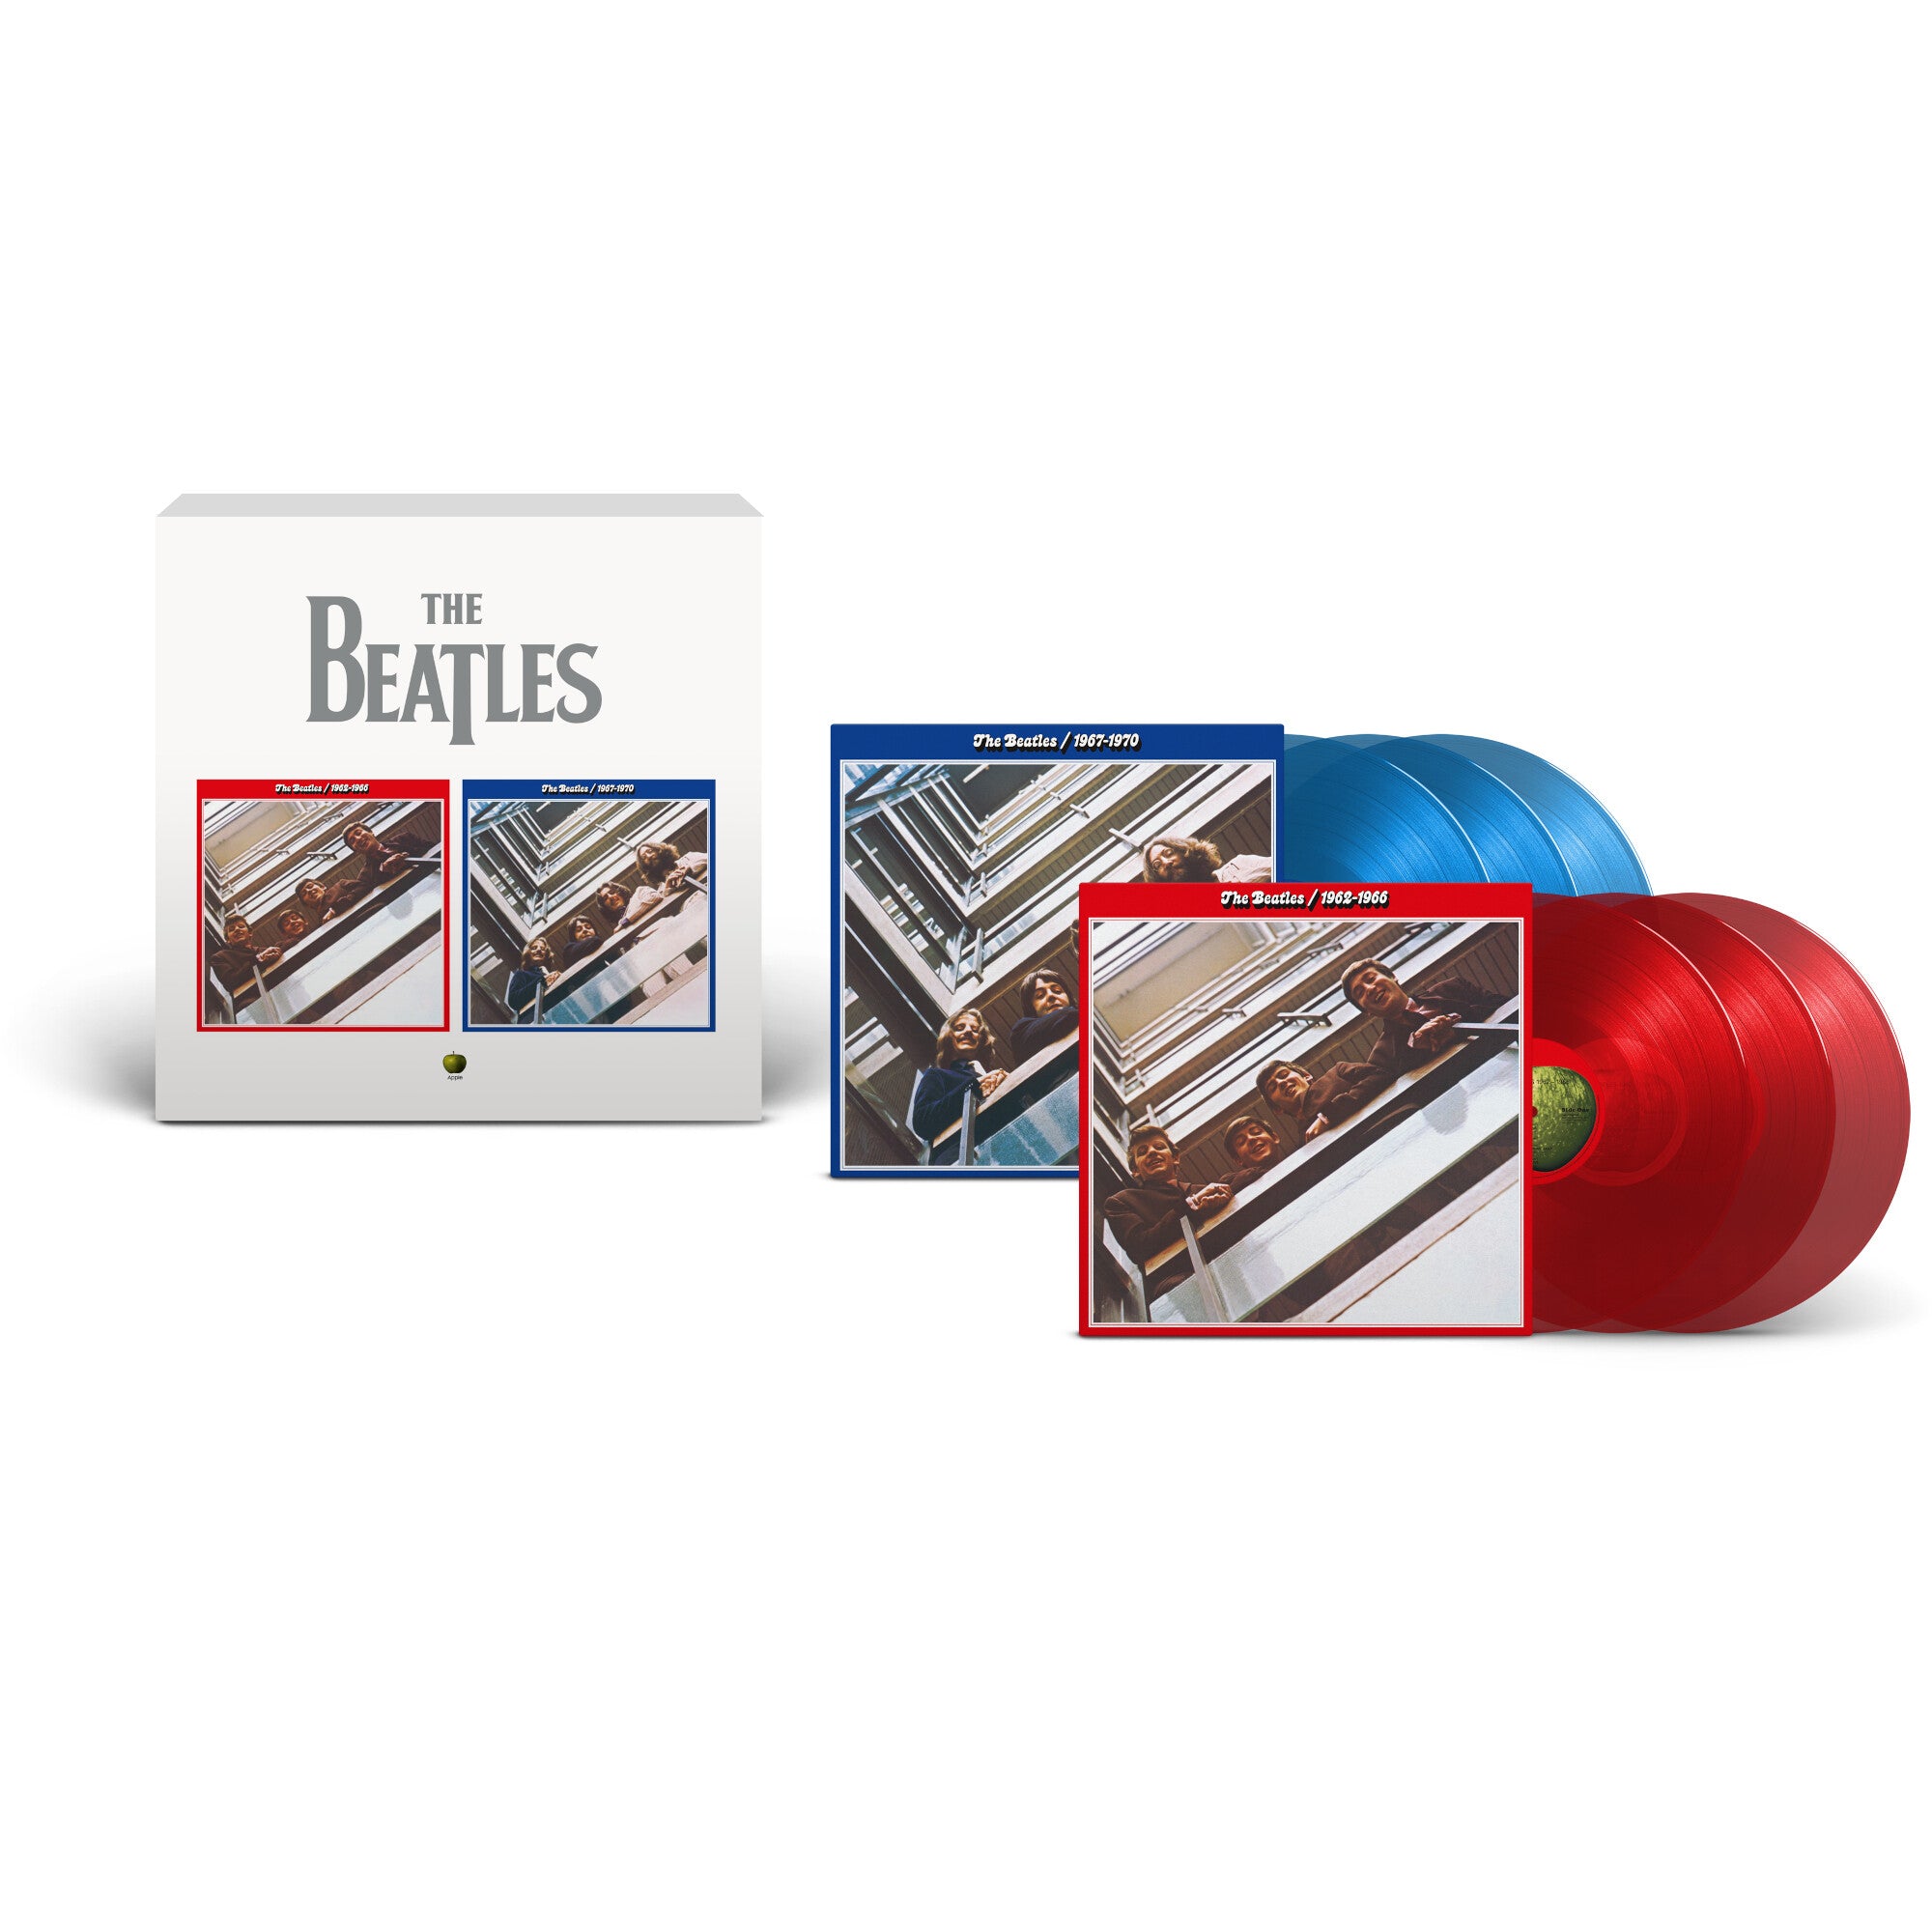 https://images.bravado.de/prod/product-assets/product-asset-data/beatles-the/the-beatles-domestic/products/505633/web/413349/image-thumb__413349__3000x3000_original/The-Beatles-The-Beatles-1962-1966-2023-Edition-The-Beatles-1967-1970-2023-Edition-Vinyl-505633-413349.jpg